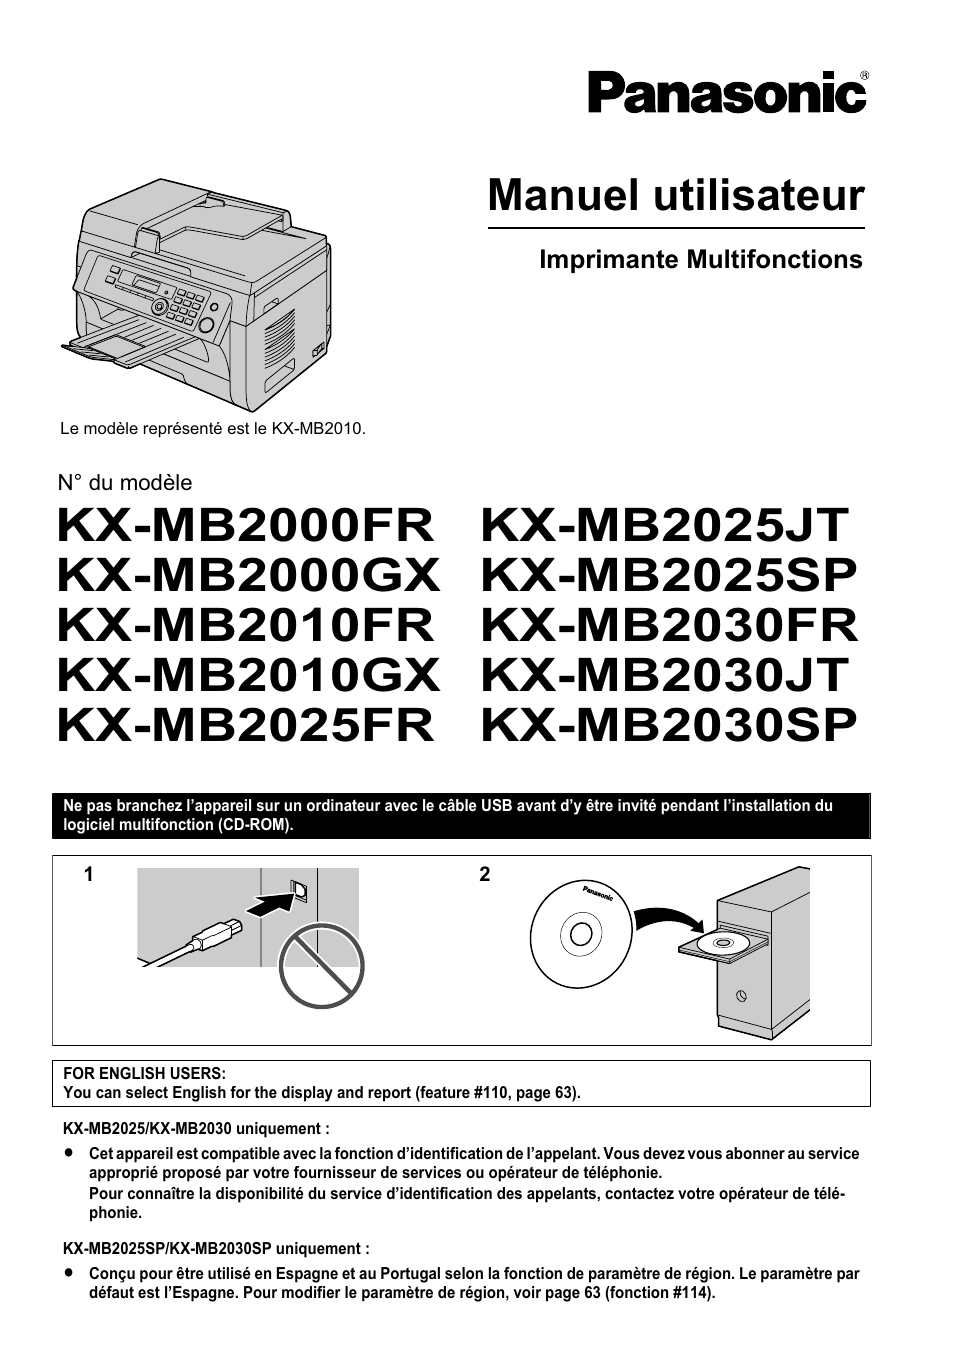 Panasonic KXMB2030SP Manuel d'utilisation | Pages: 128